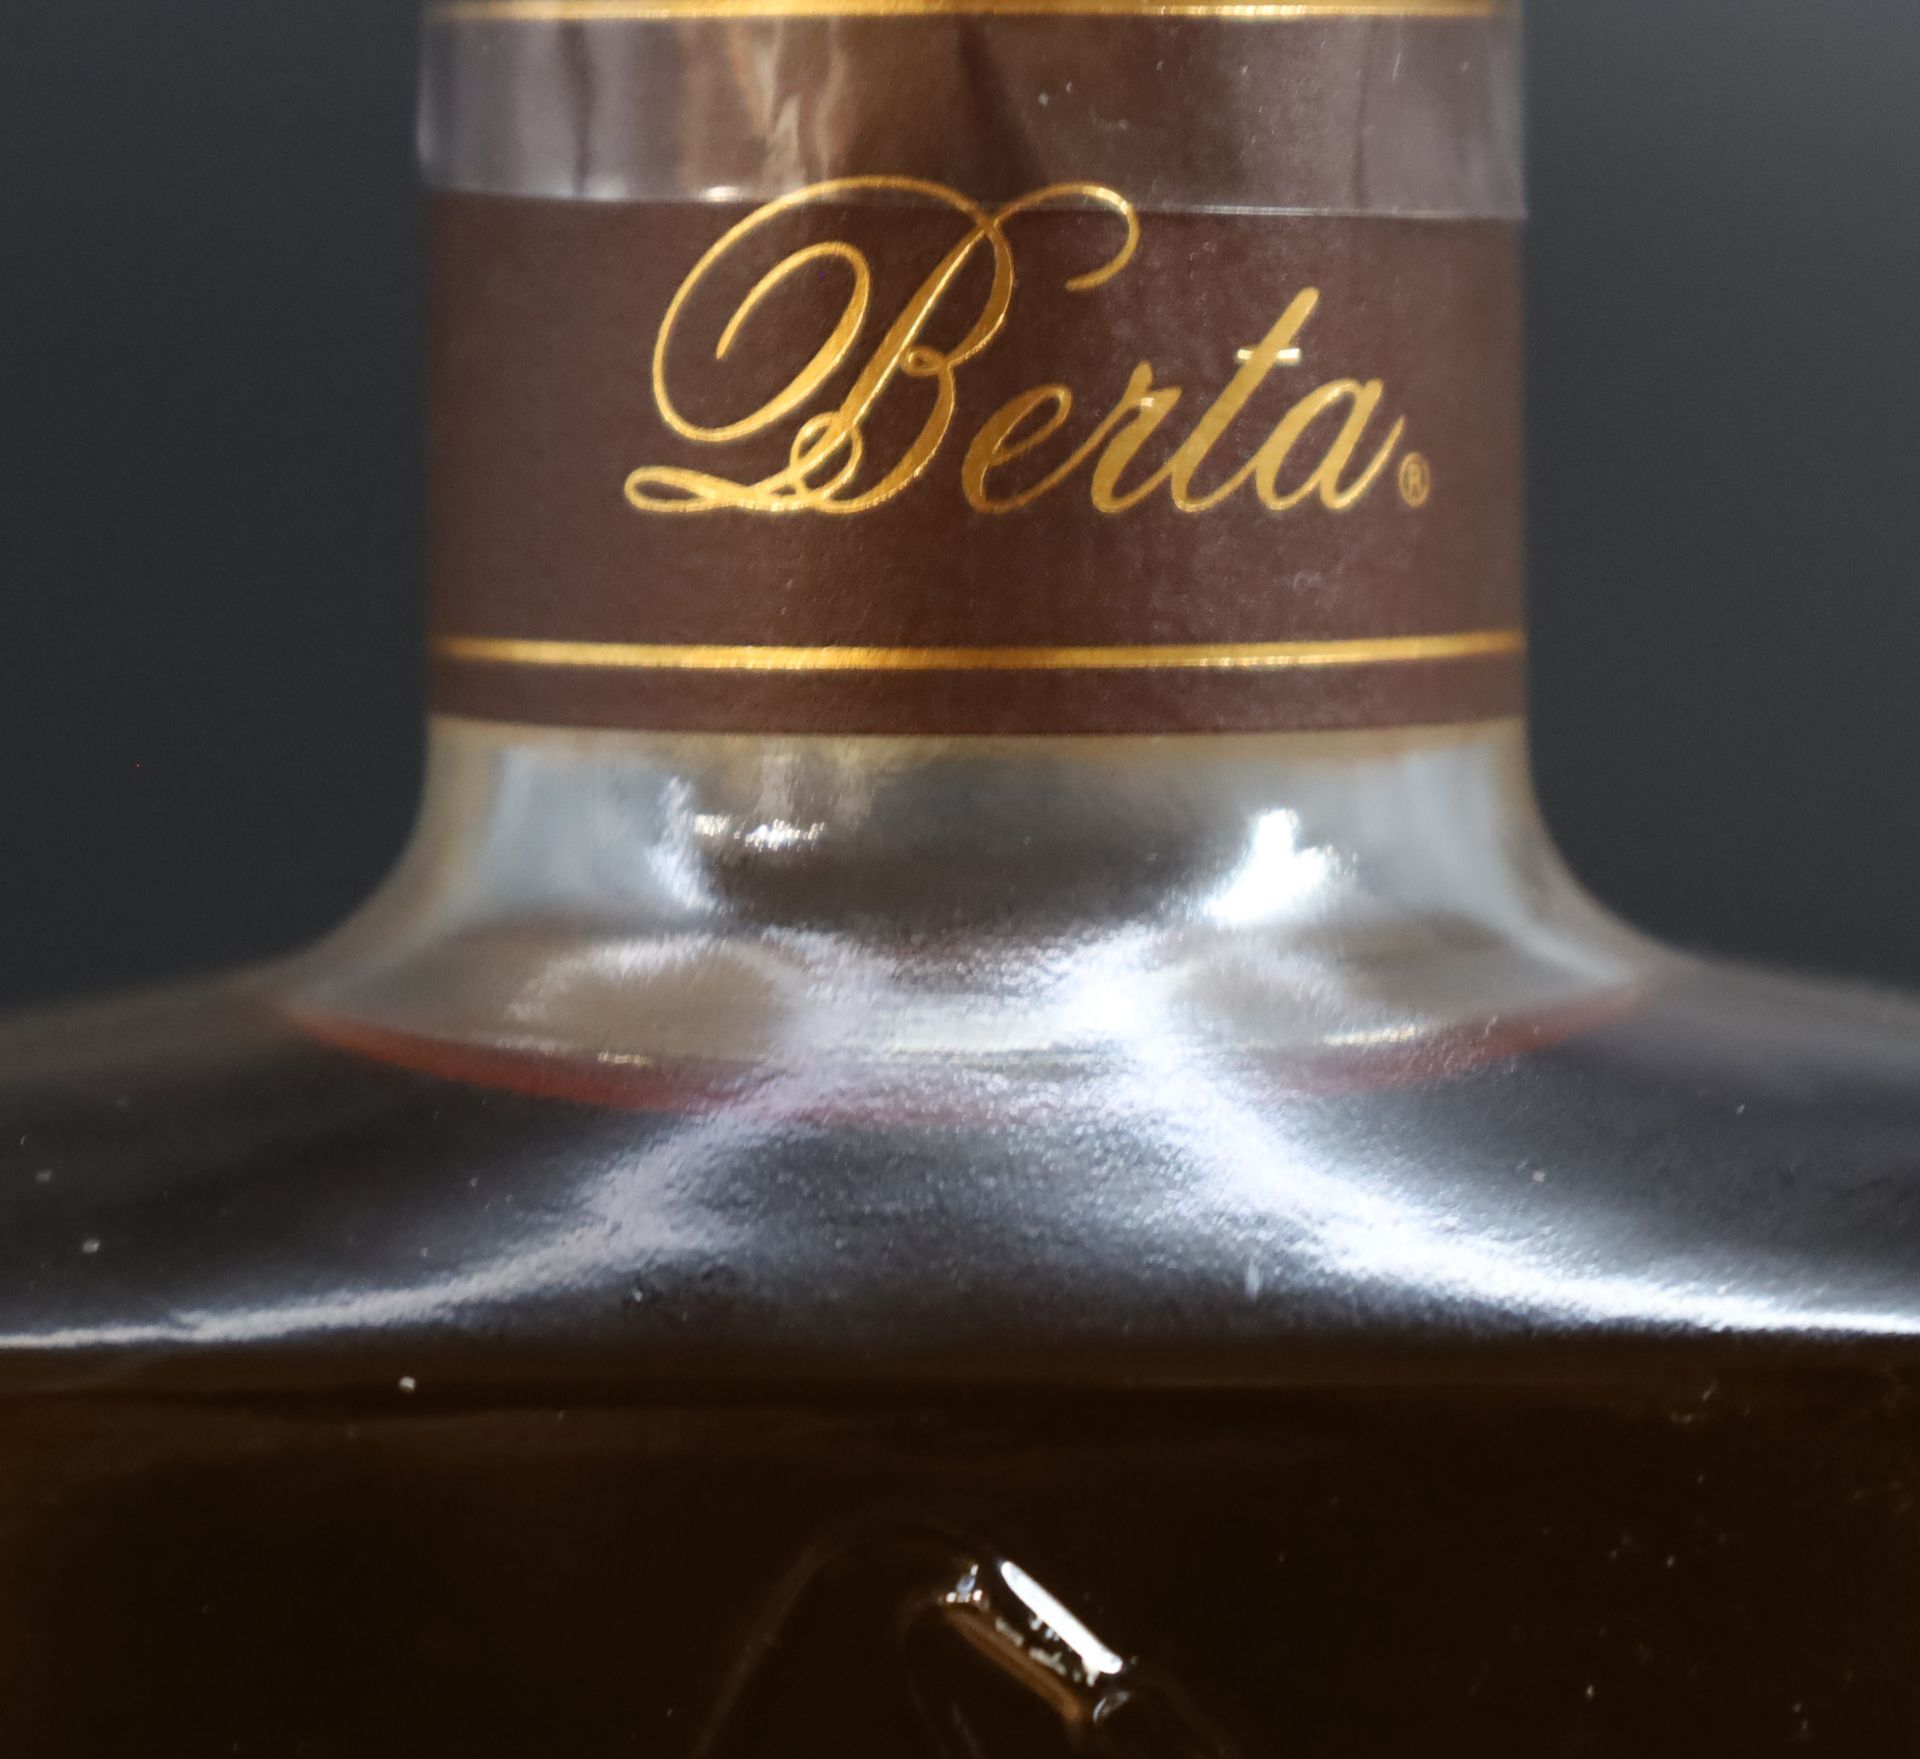 1 bottle of grappa. BERTA. ‘Roccanivo’. Italy. 2006. - Image 2 of 5